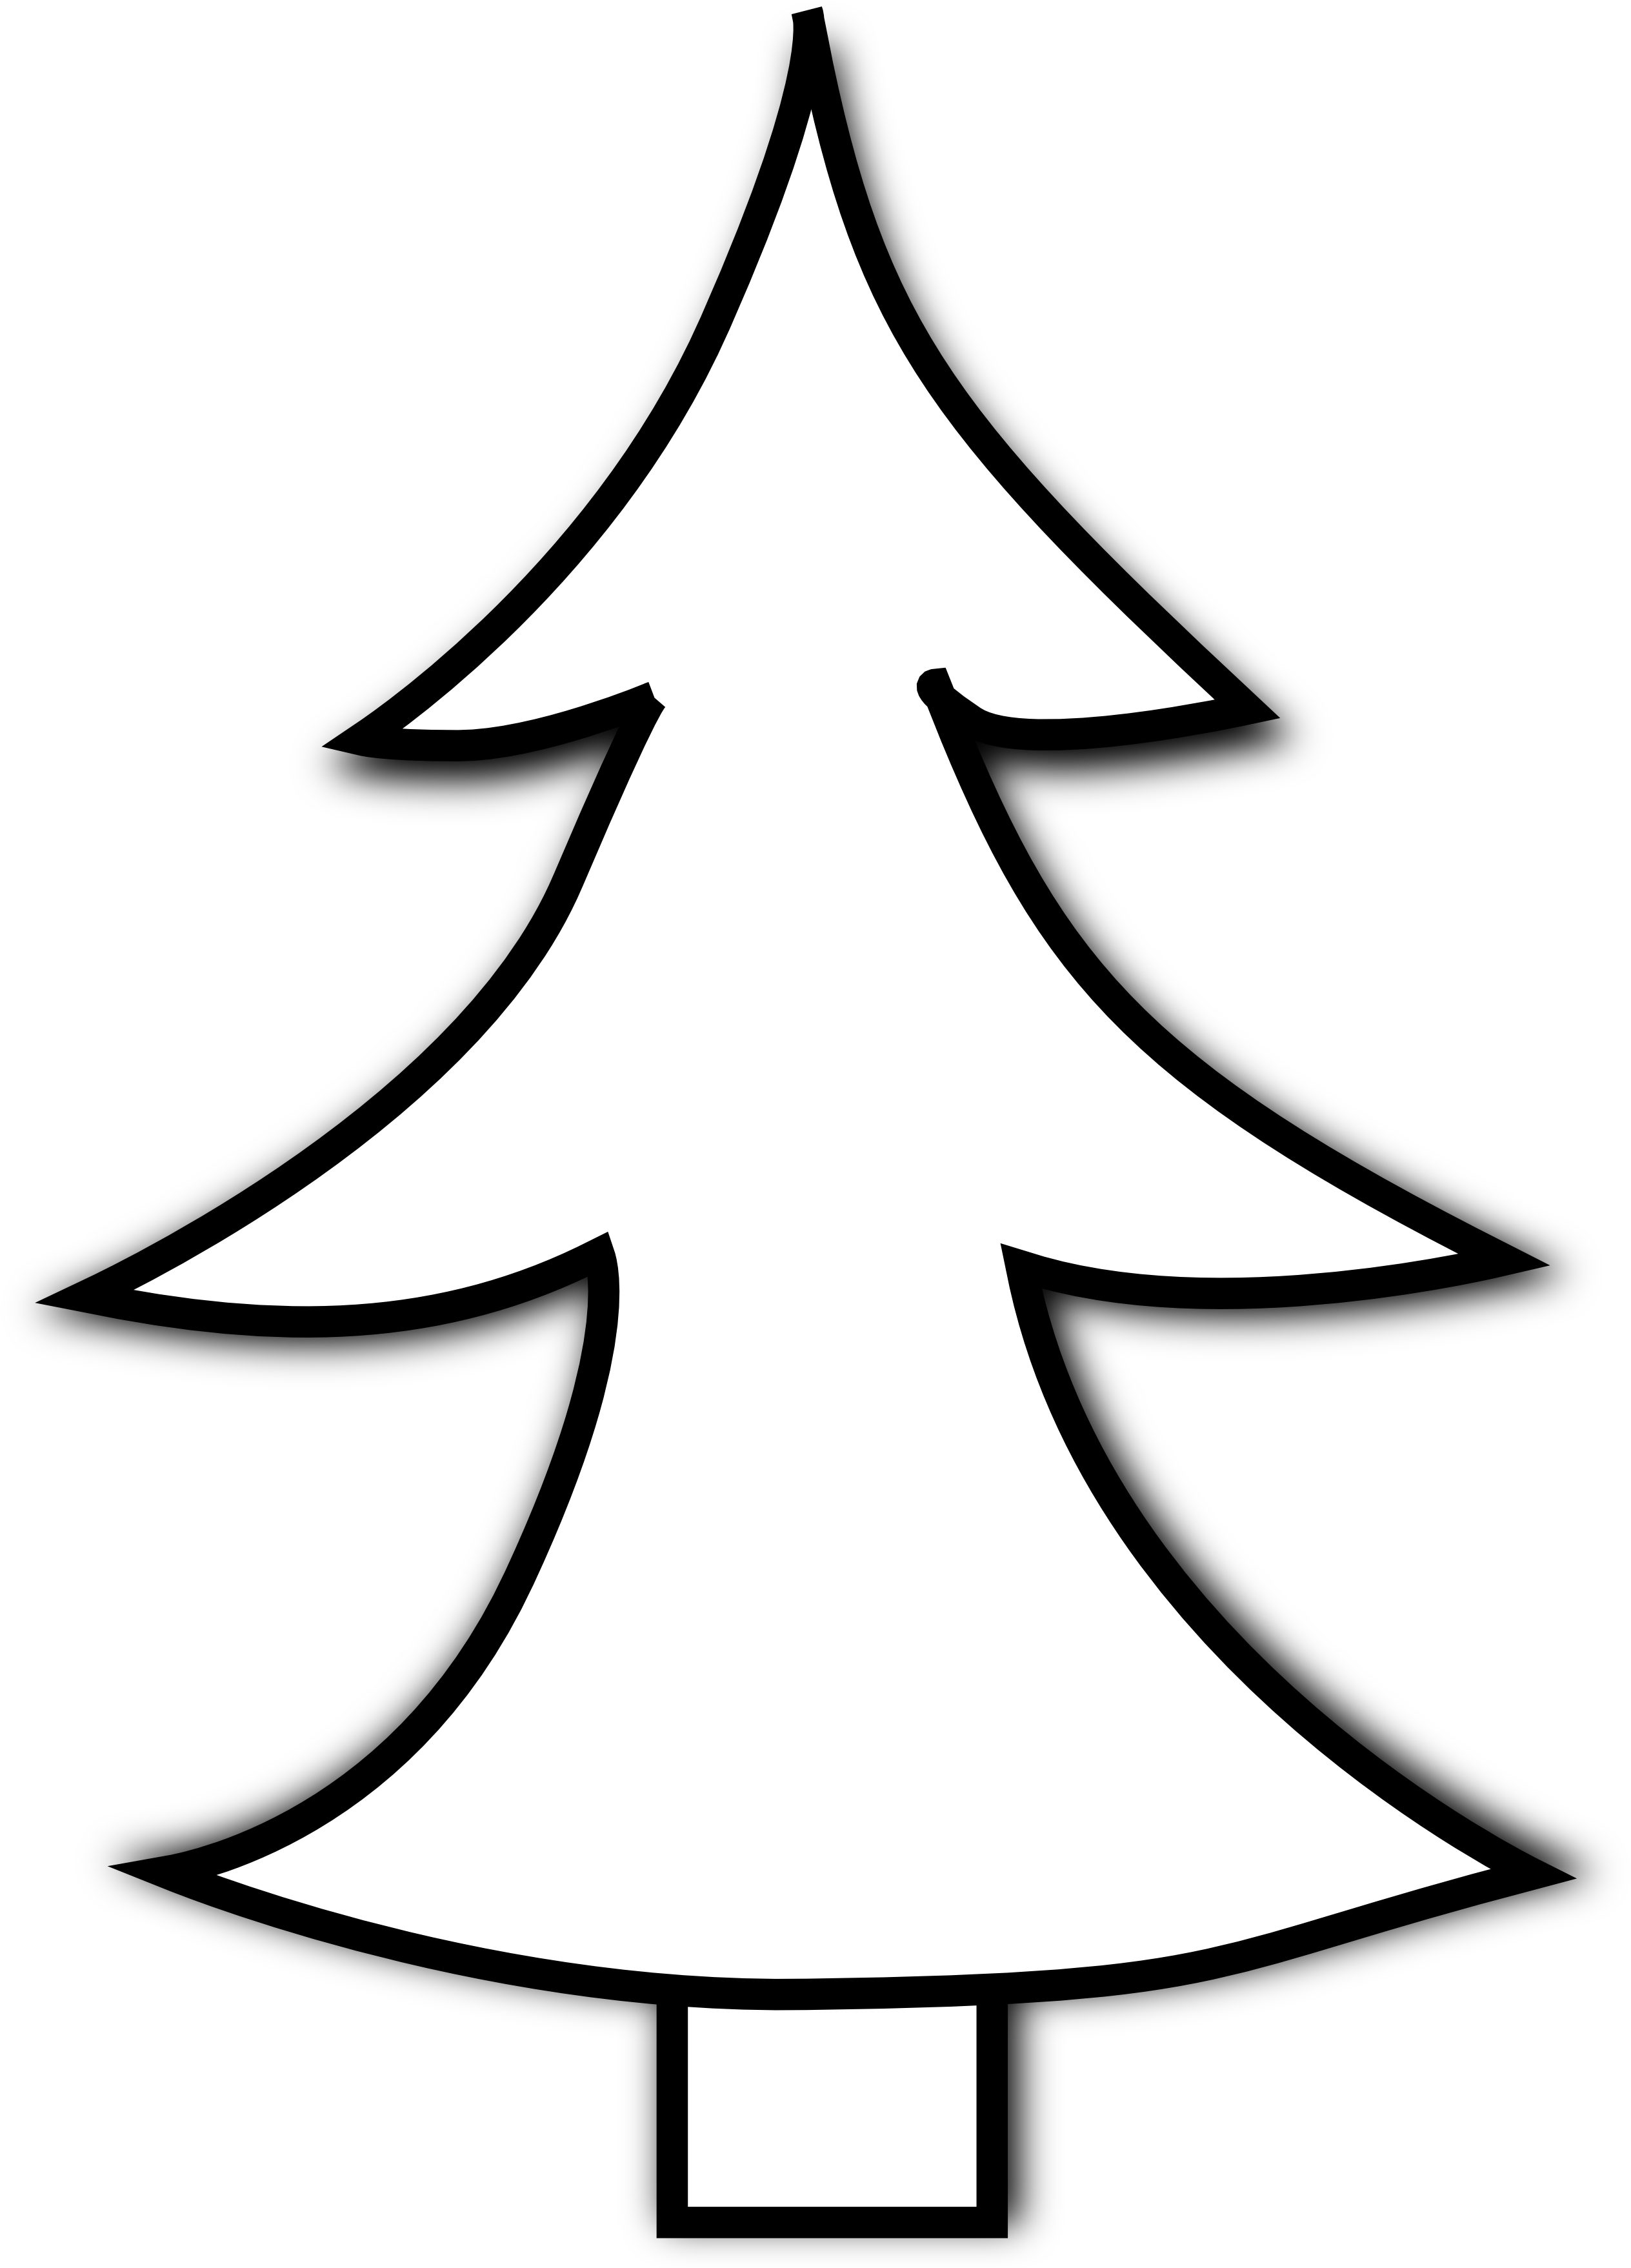 Minimalist Christmas Tree Clipart PNG image